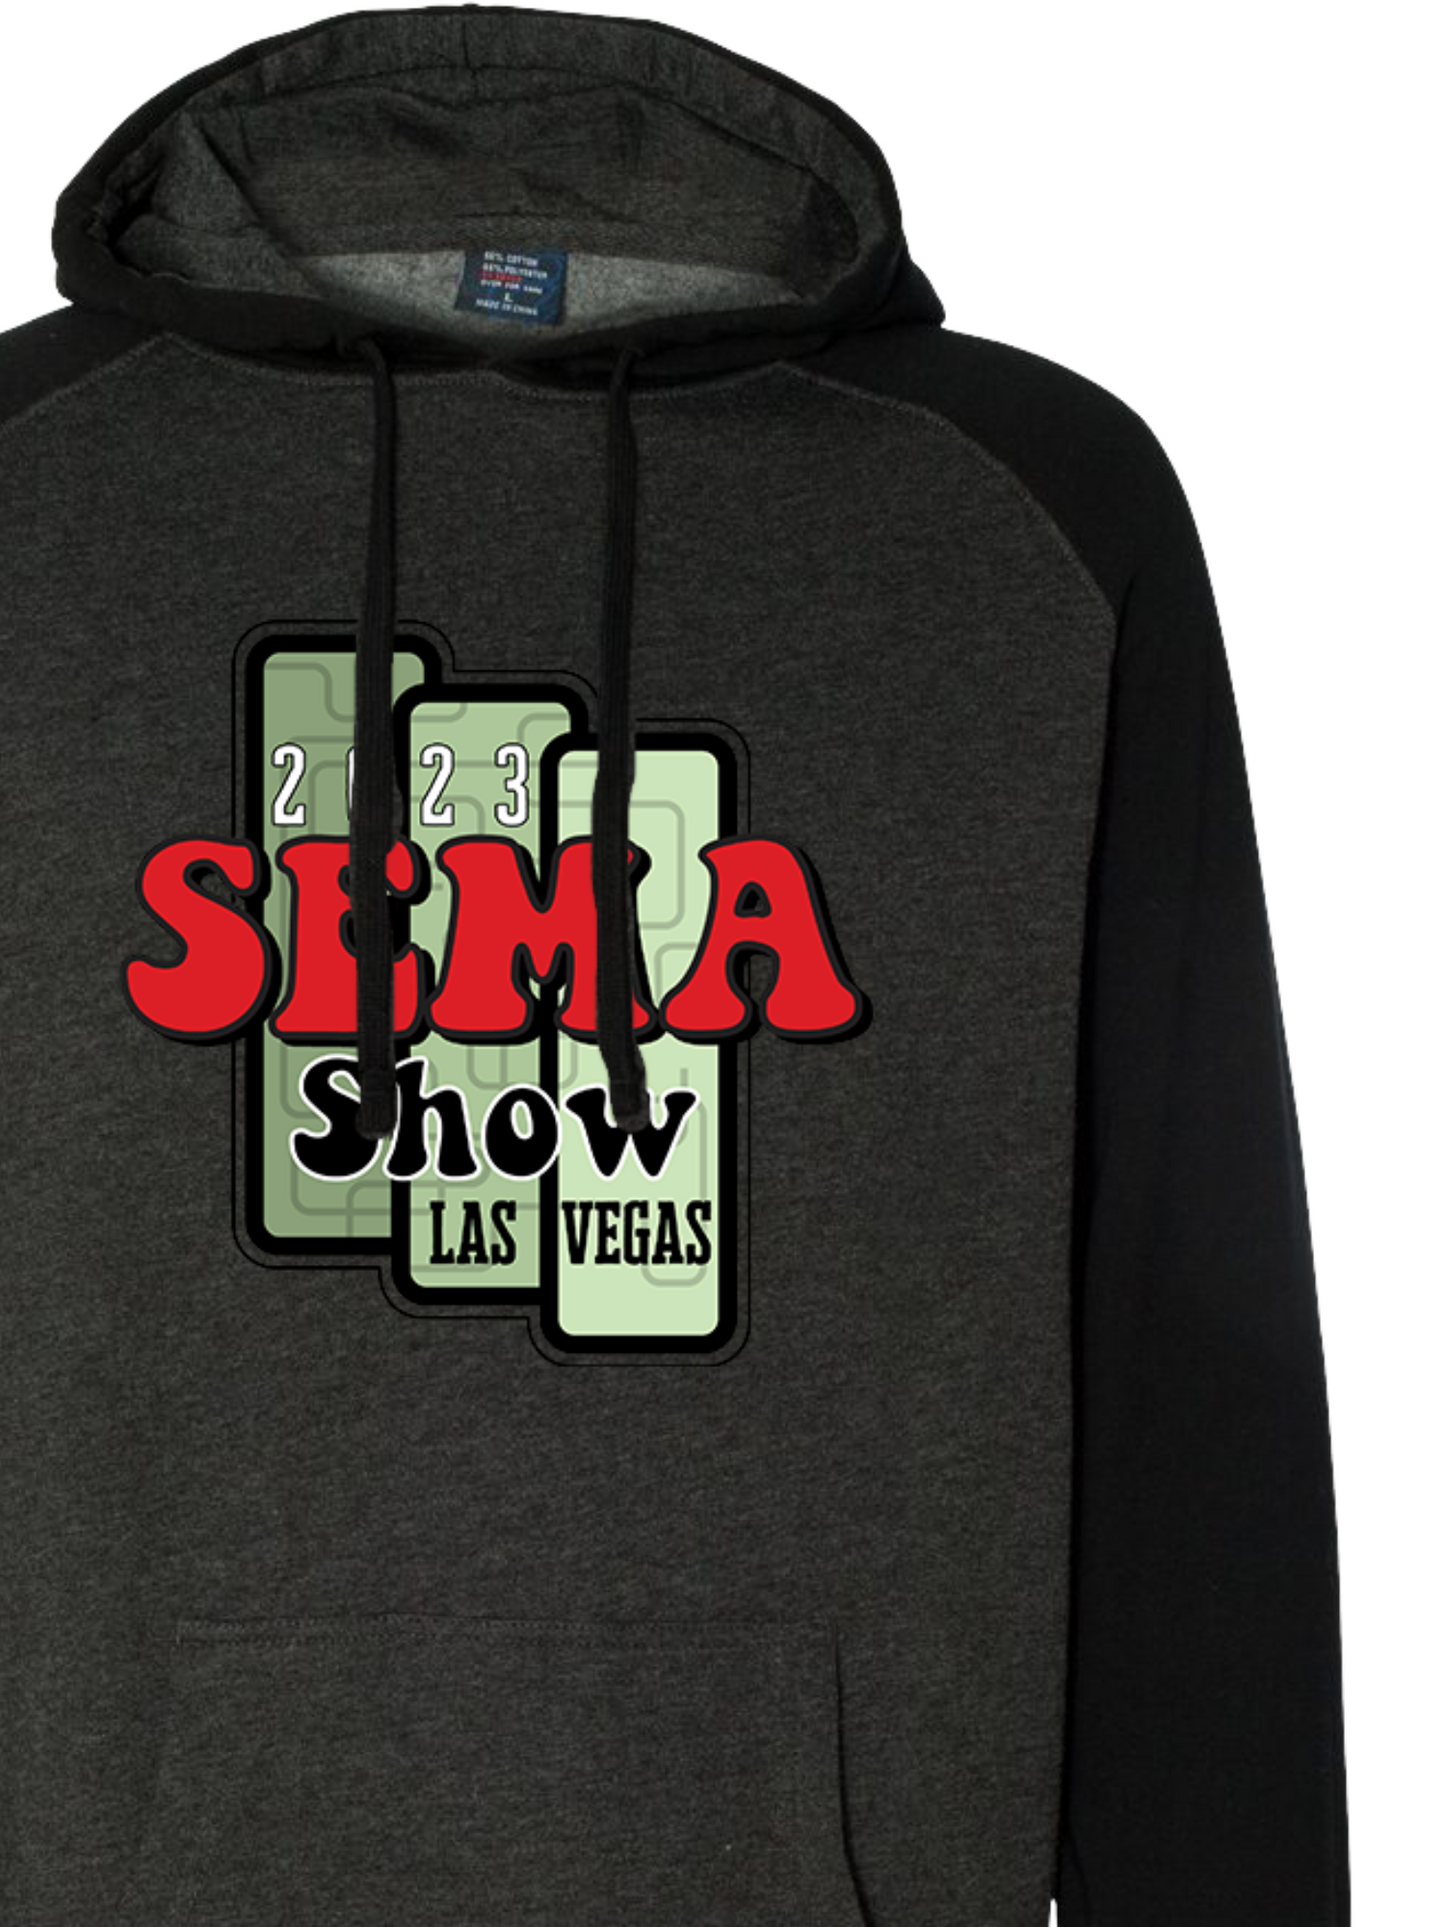 2023 SEMA Show Retro - Black/Charcoal Raglan - Adult Unisex Pullover Hoodie